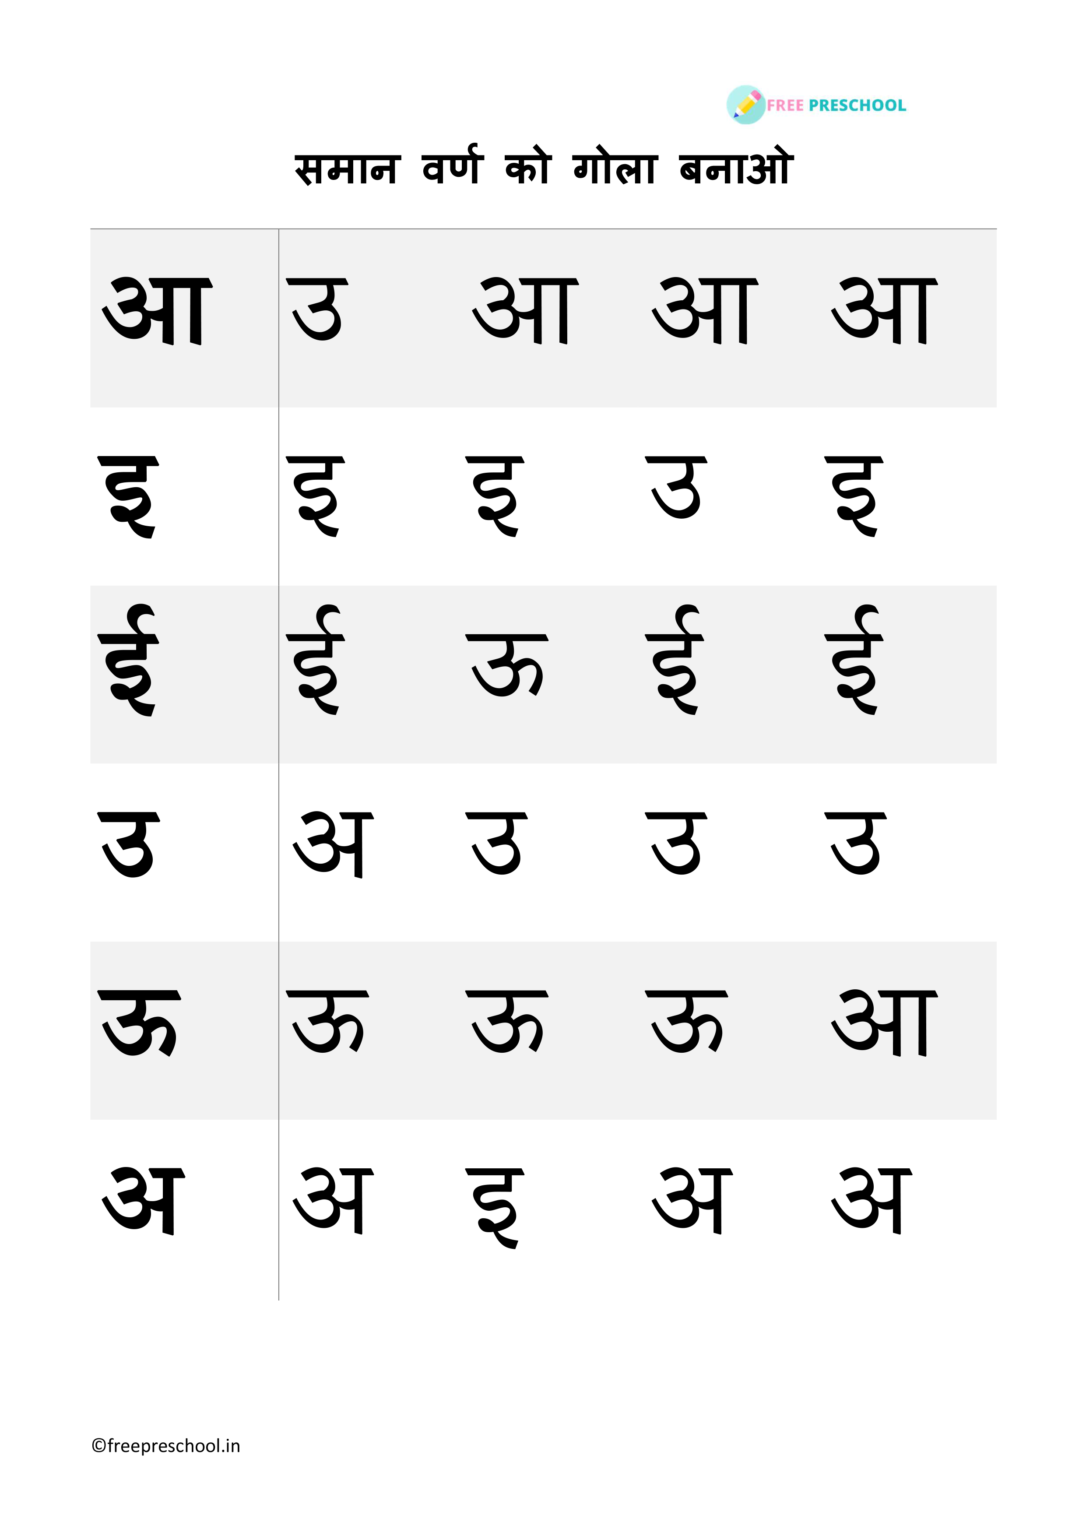 Hindi Worksheets MATCHING Free Preschool